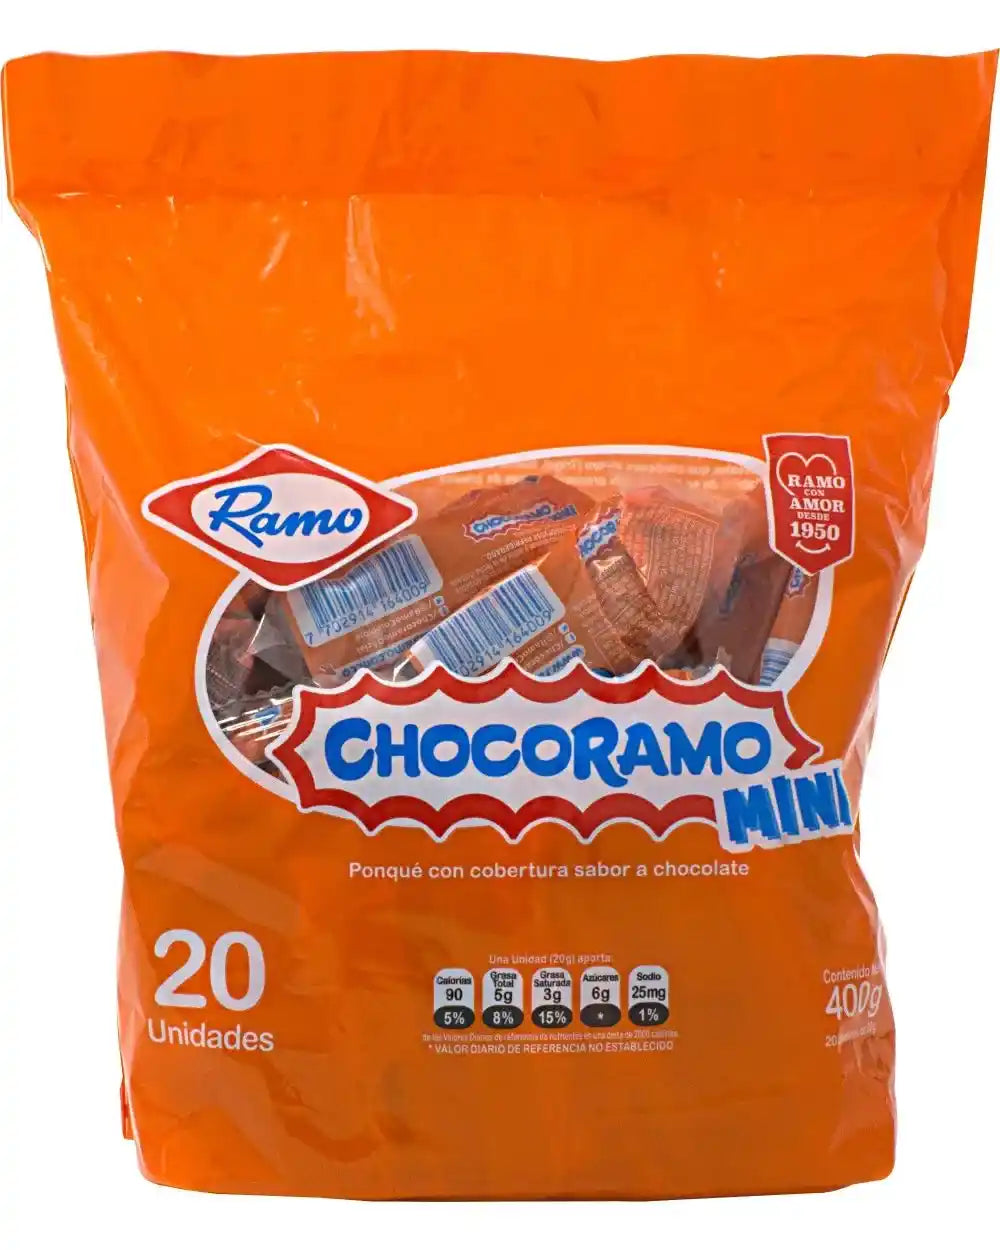 Chocoramo mini bag - vanilla cake covered with chocolate 400g